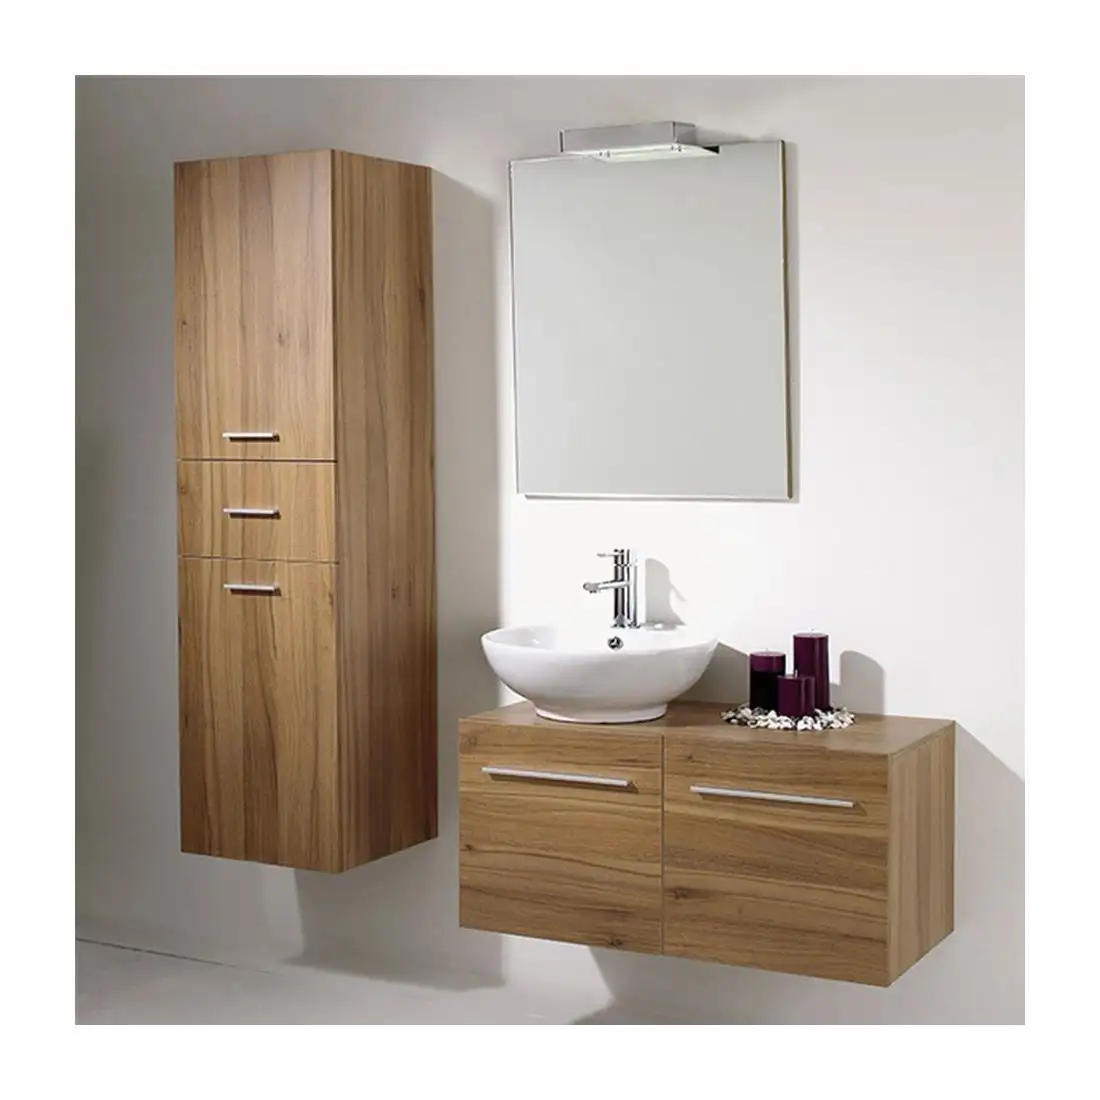 CBDMART Supplying Cabinet Bathroom Luxury Vanity Competitive Price Double Sink Bathroom Vanity